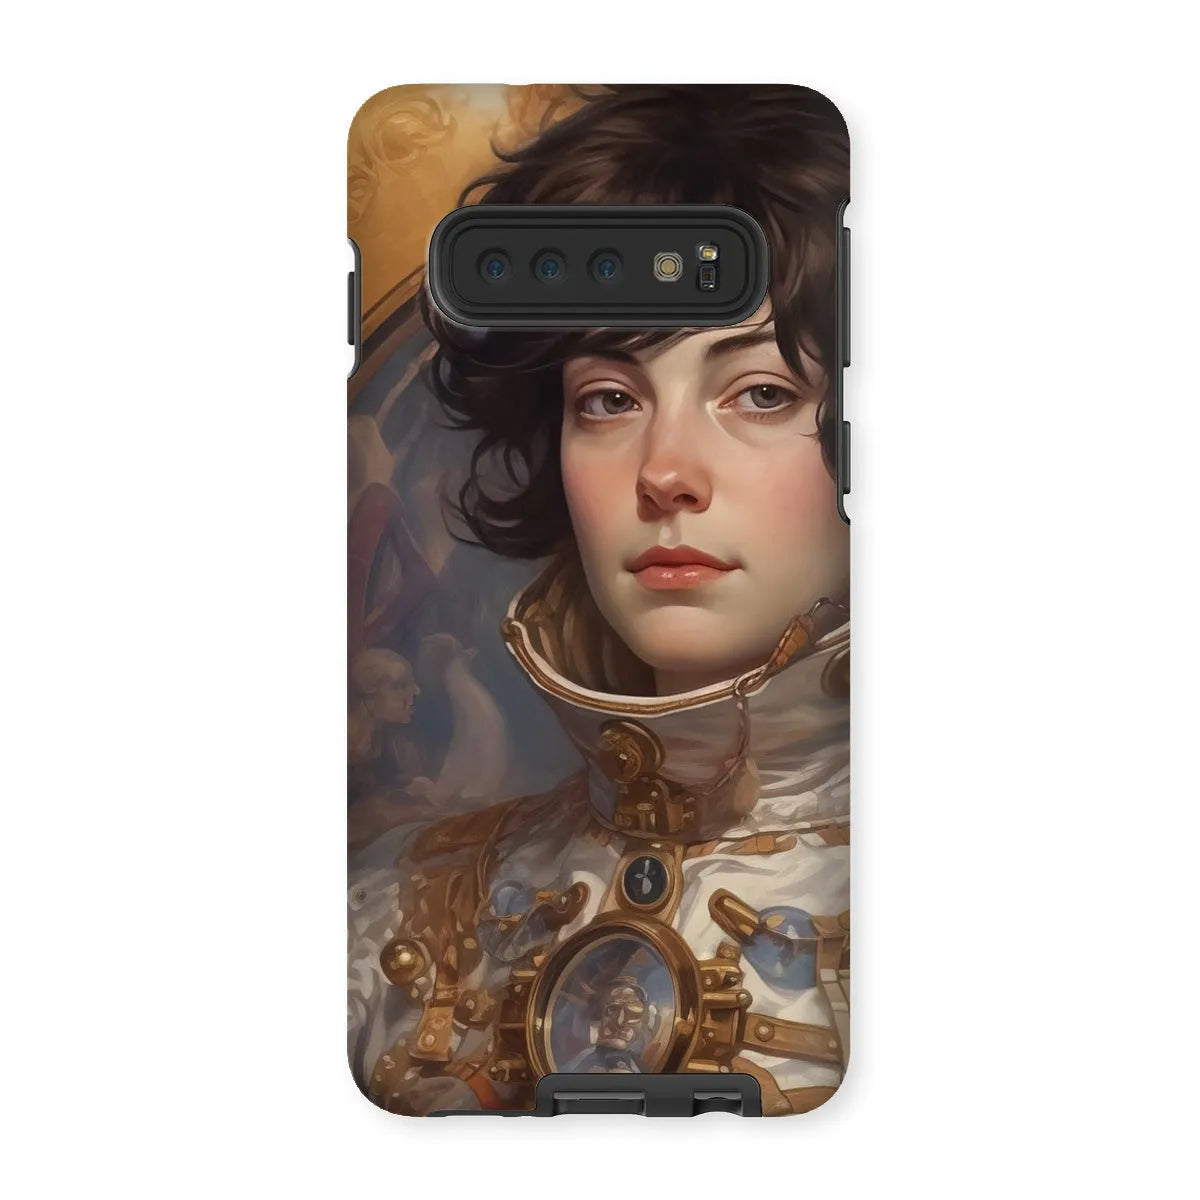 Chloé The Lesbian Astronaut - Space Aesthetic Art Phone Case - Samsung Galaxy S10 / Matte - Mobile Phone Cases